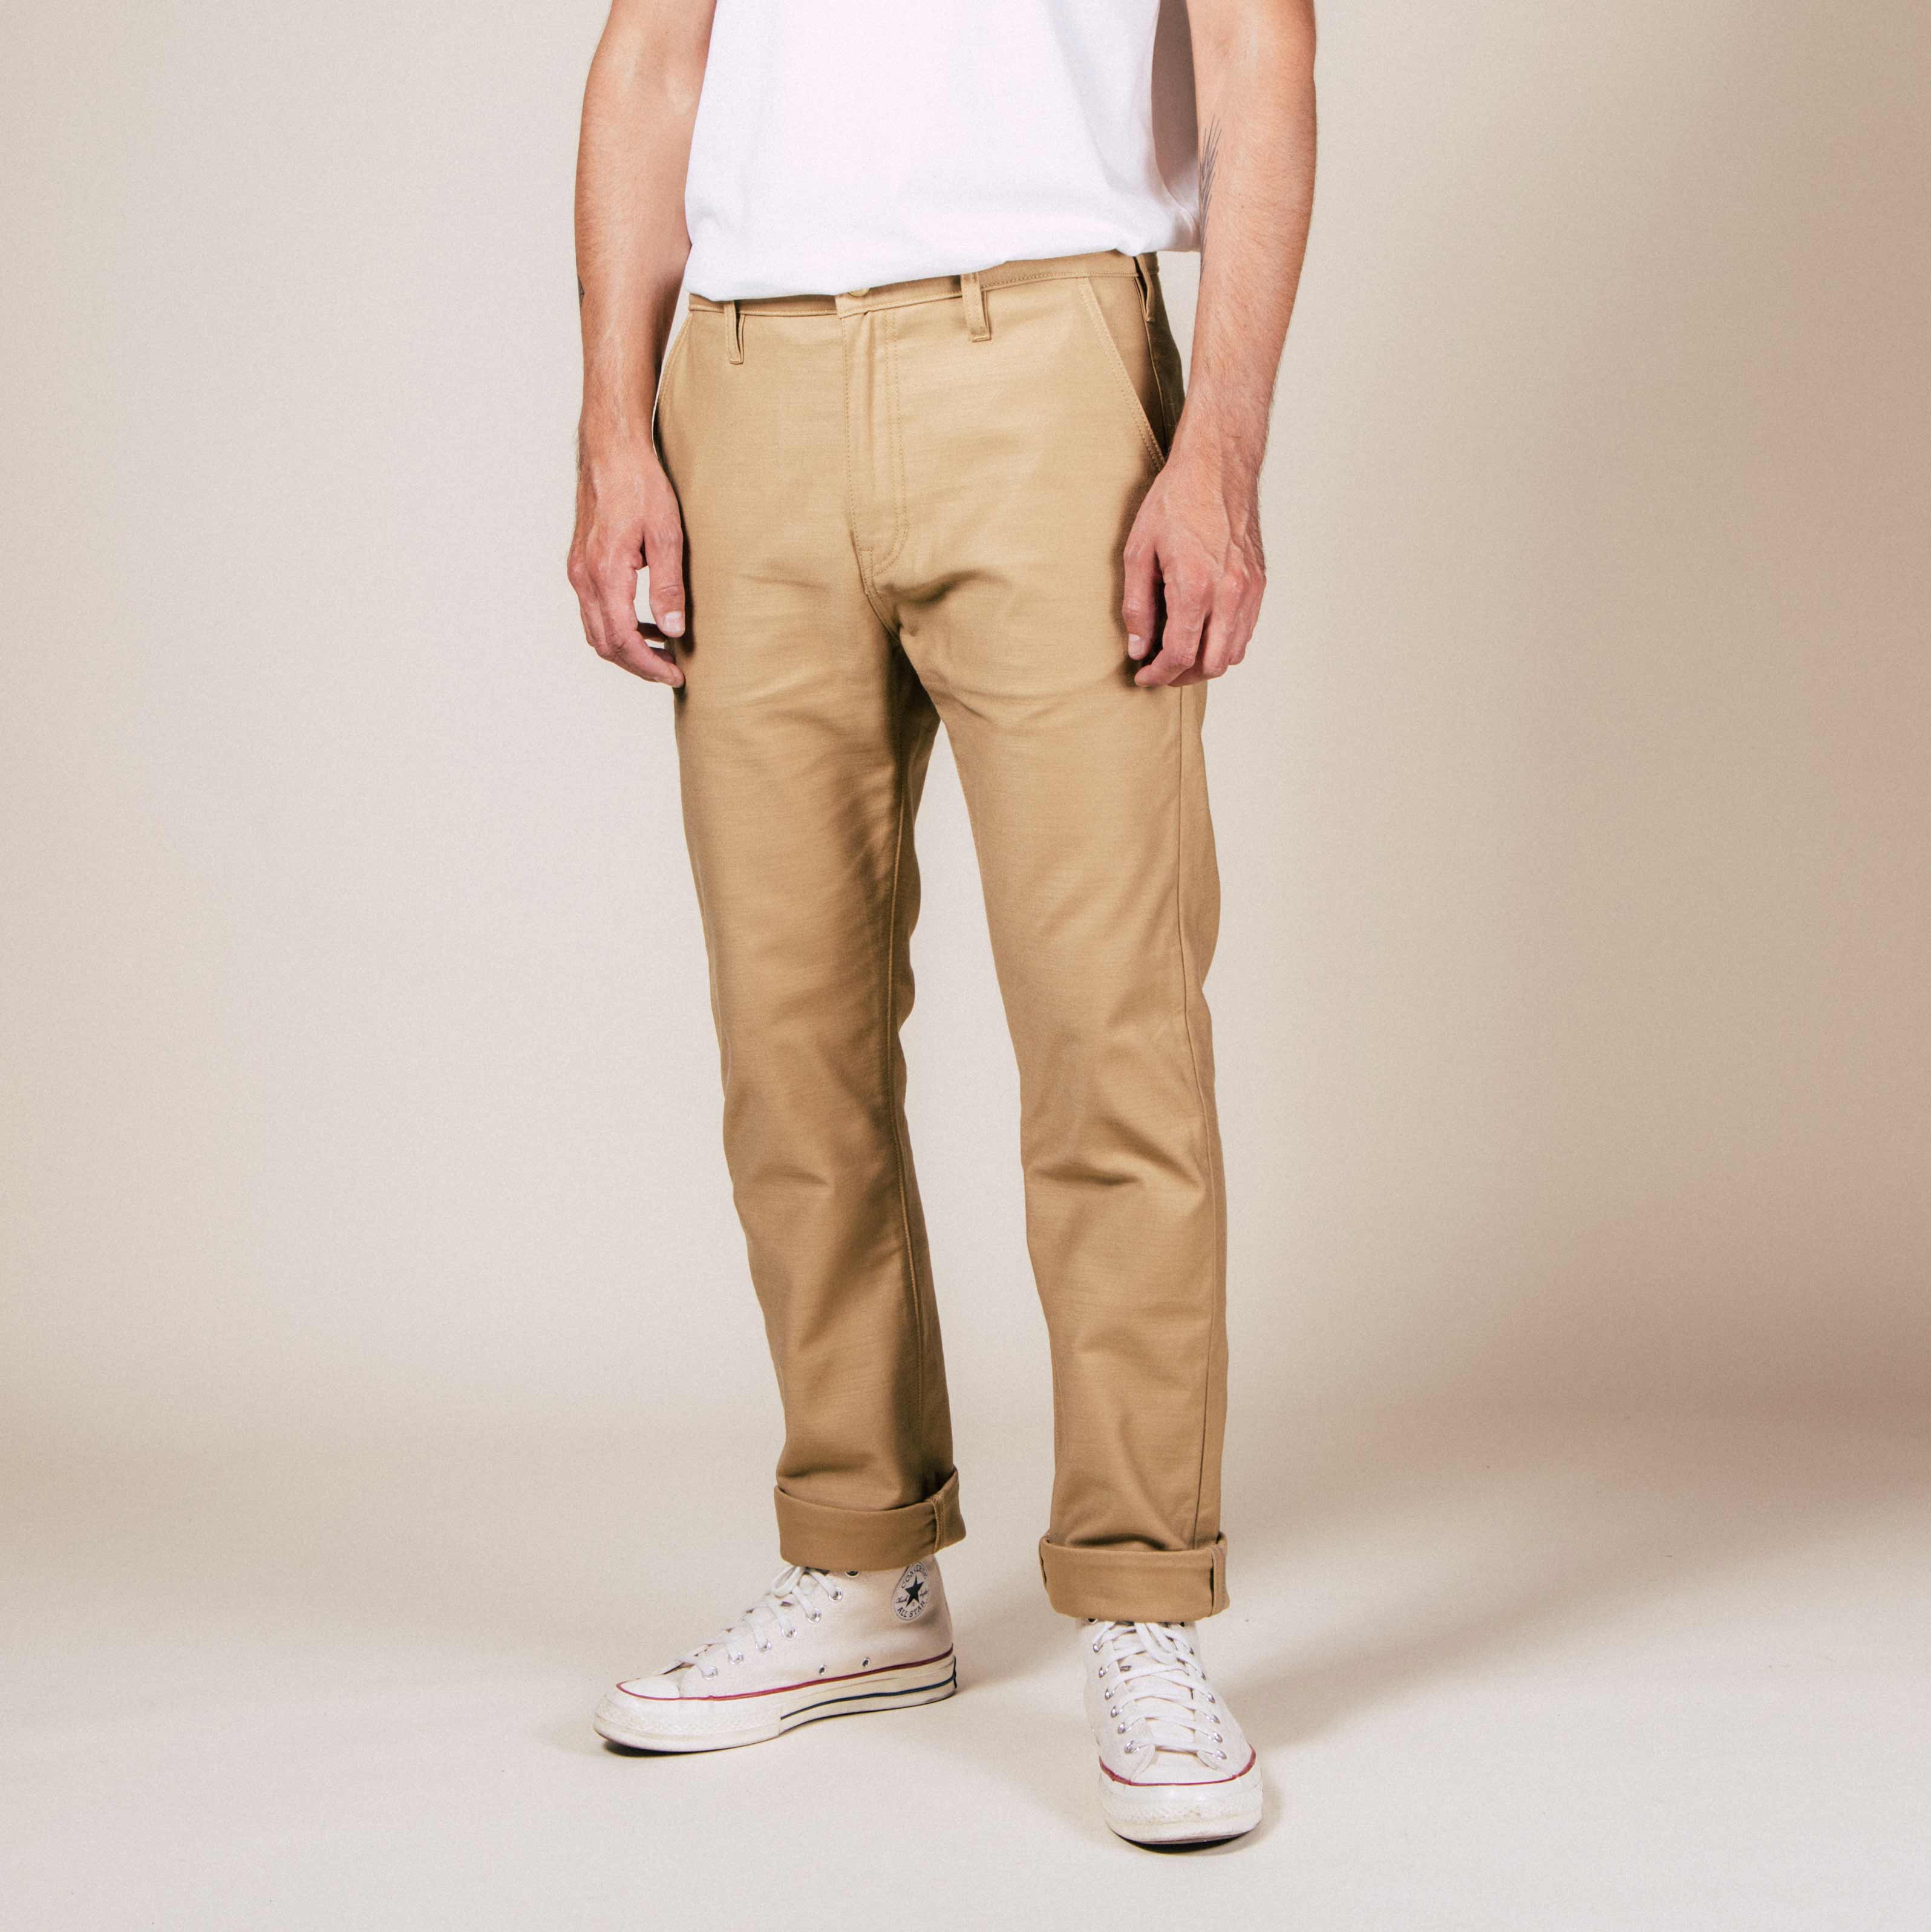 Men's Slim Fit Skinny Dress Pants, Mens Fashion Slim Fit Stretch Dress Pants  Plaid Pants for Men Brown at Amazon Men's Clothing store